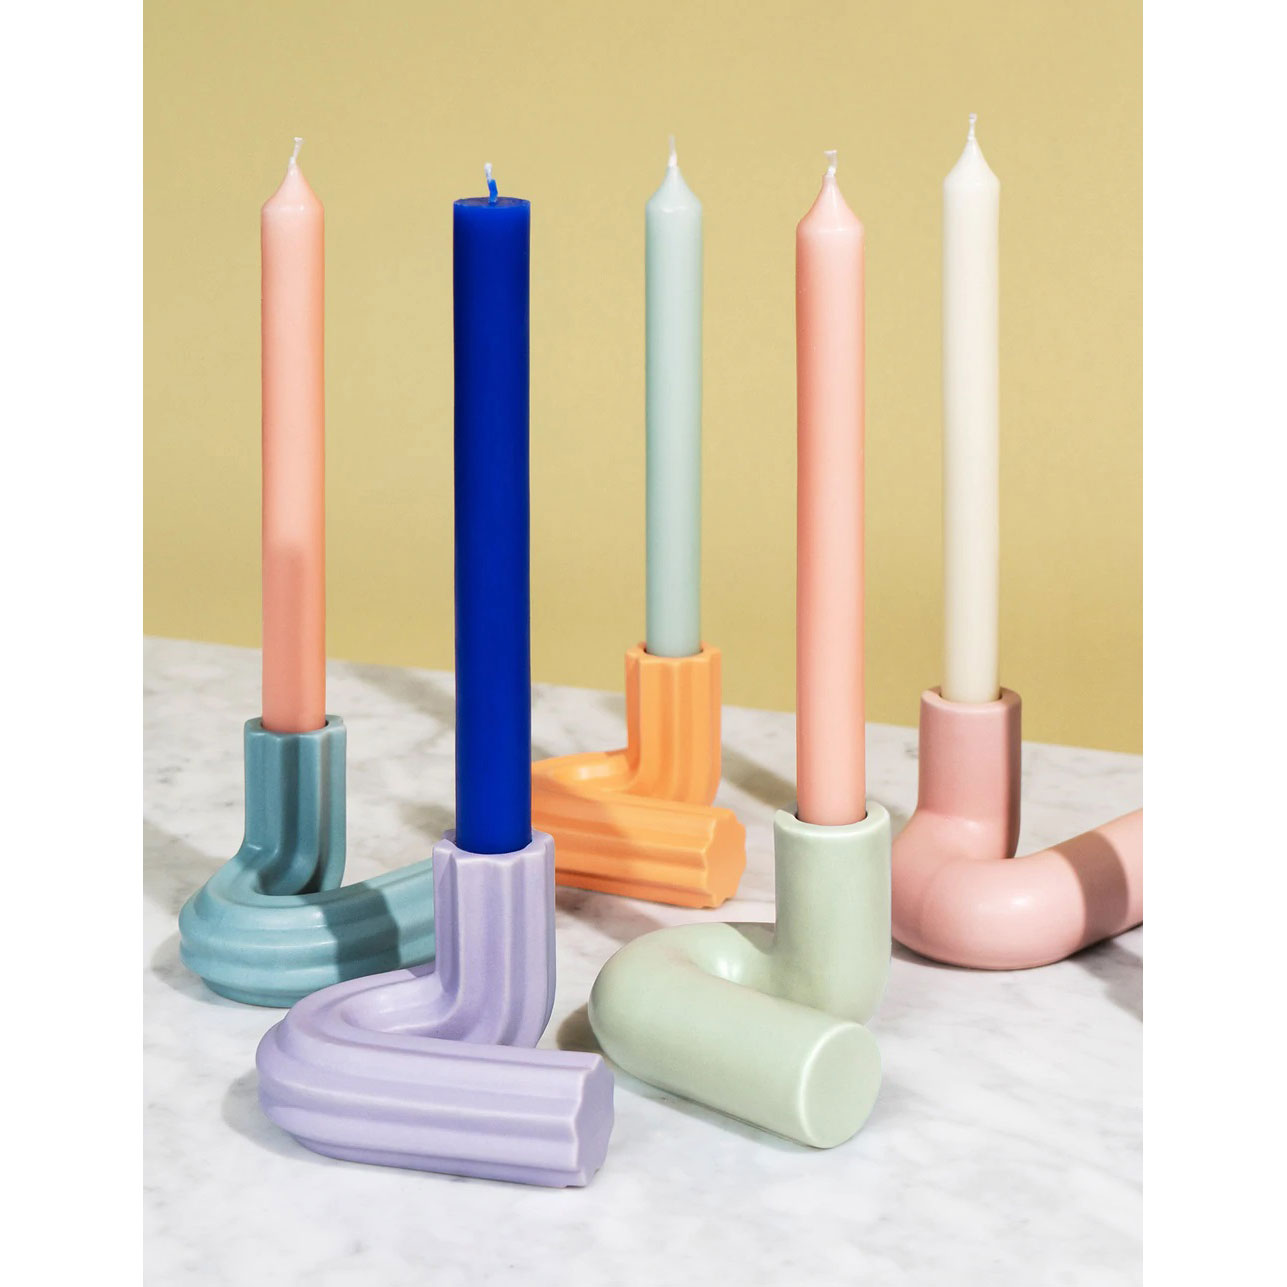 Octaevo Templo Candle Holder - Light Blue